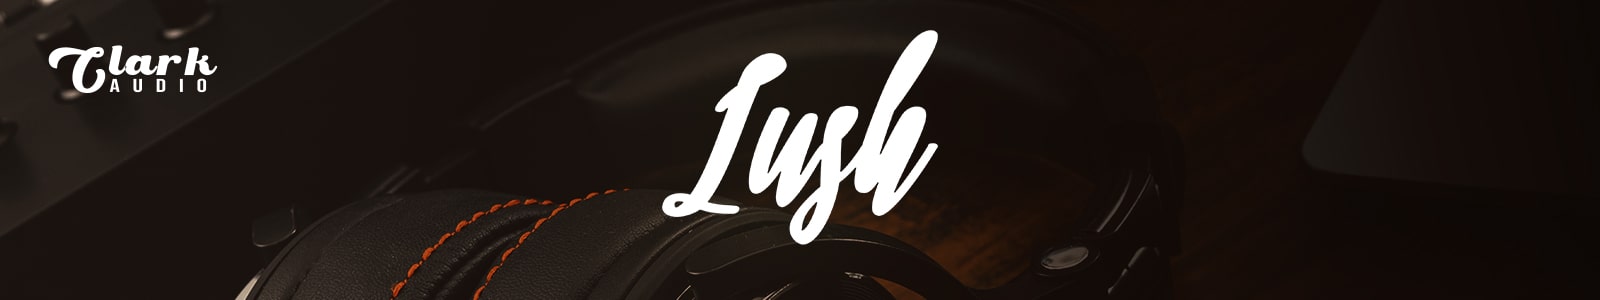 Lush VST/AU by Clark Audio